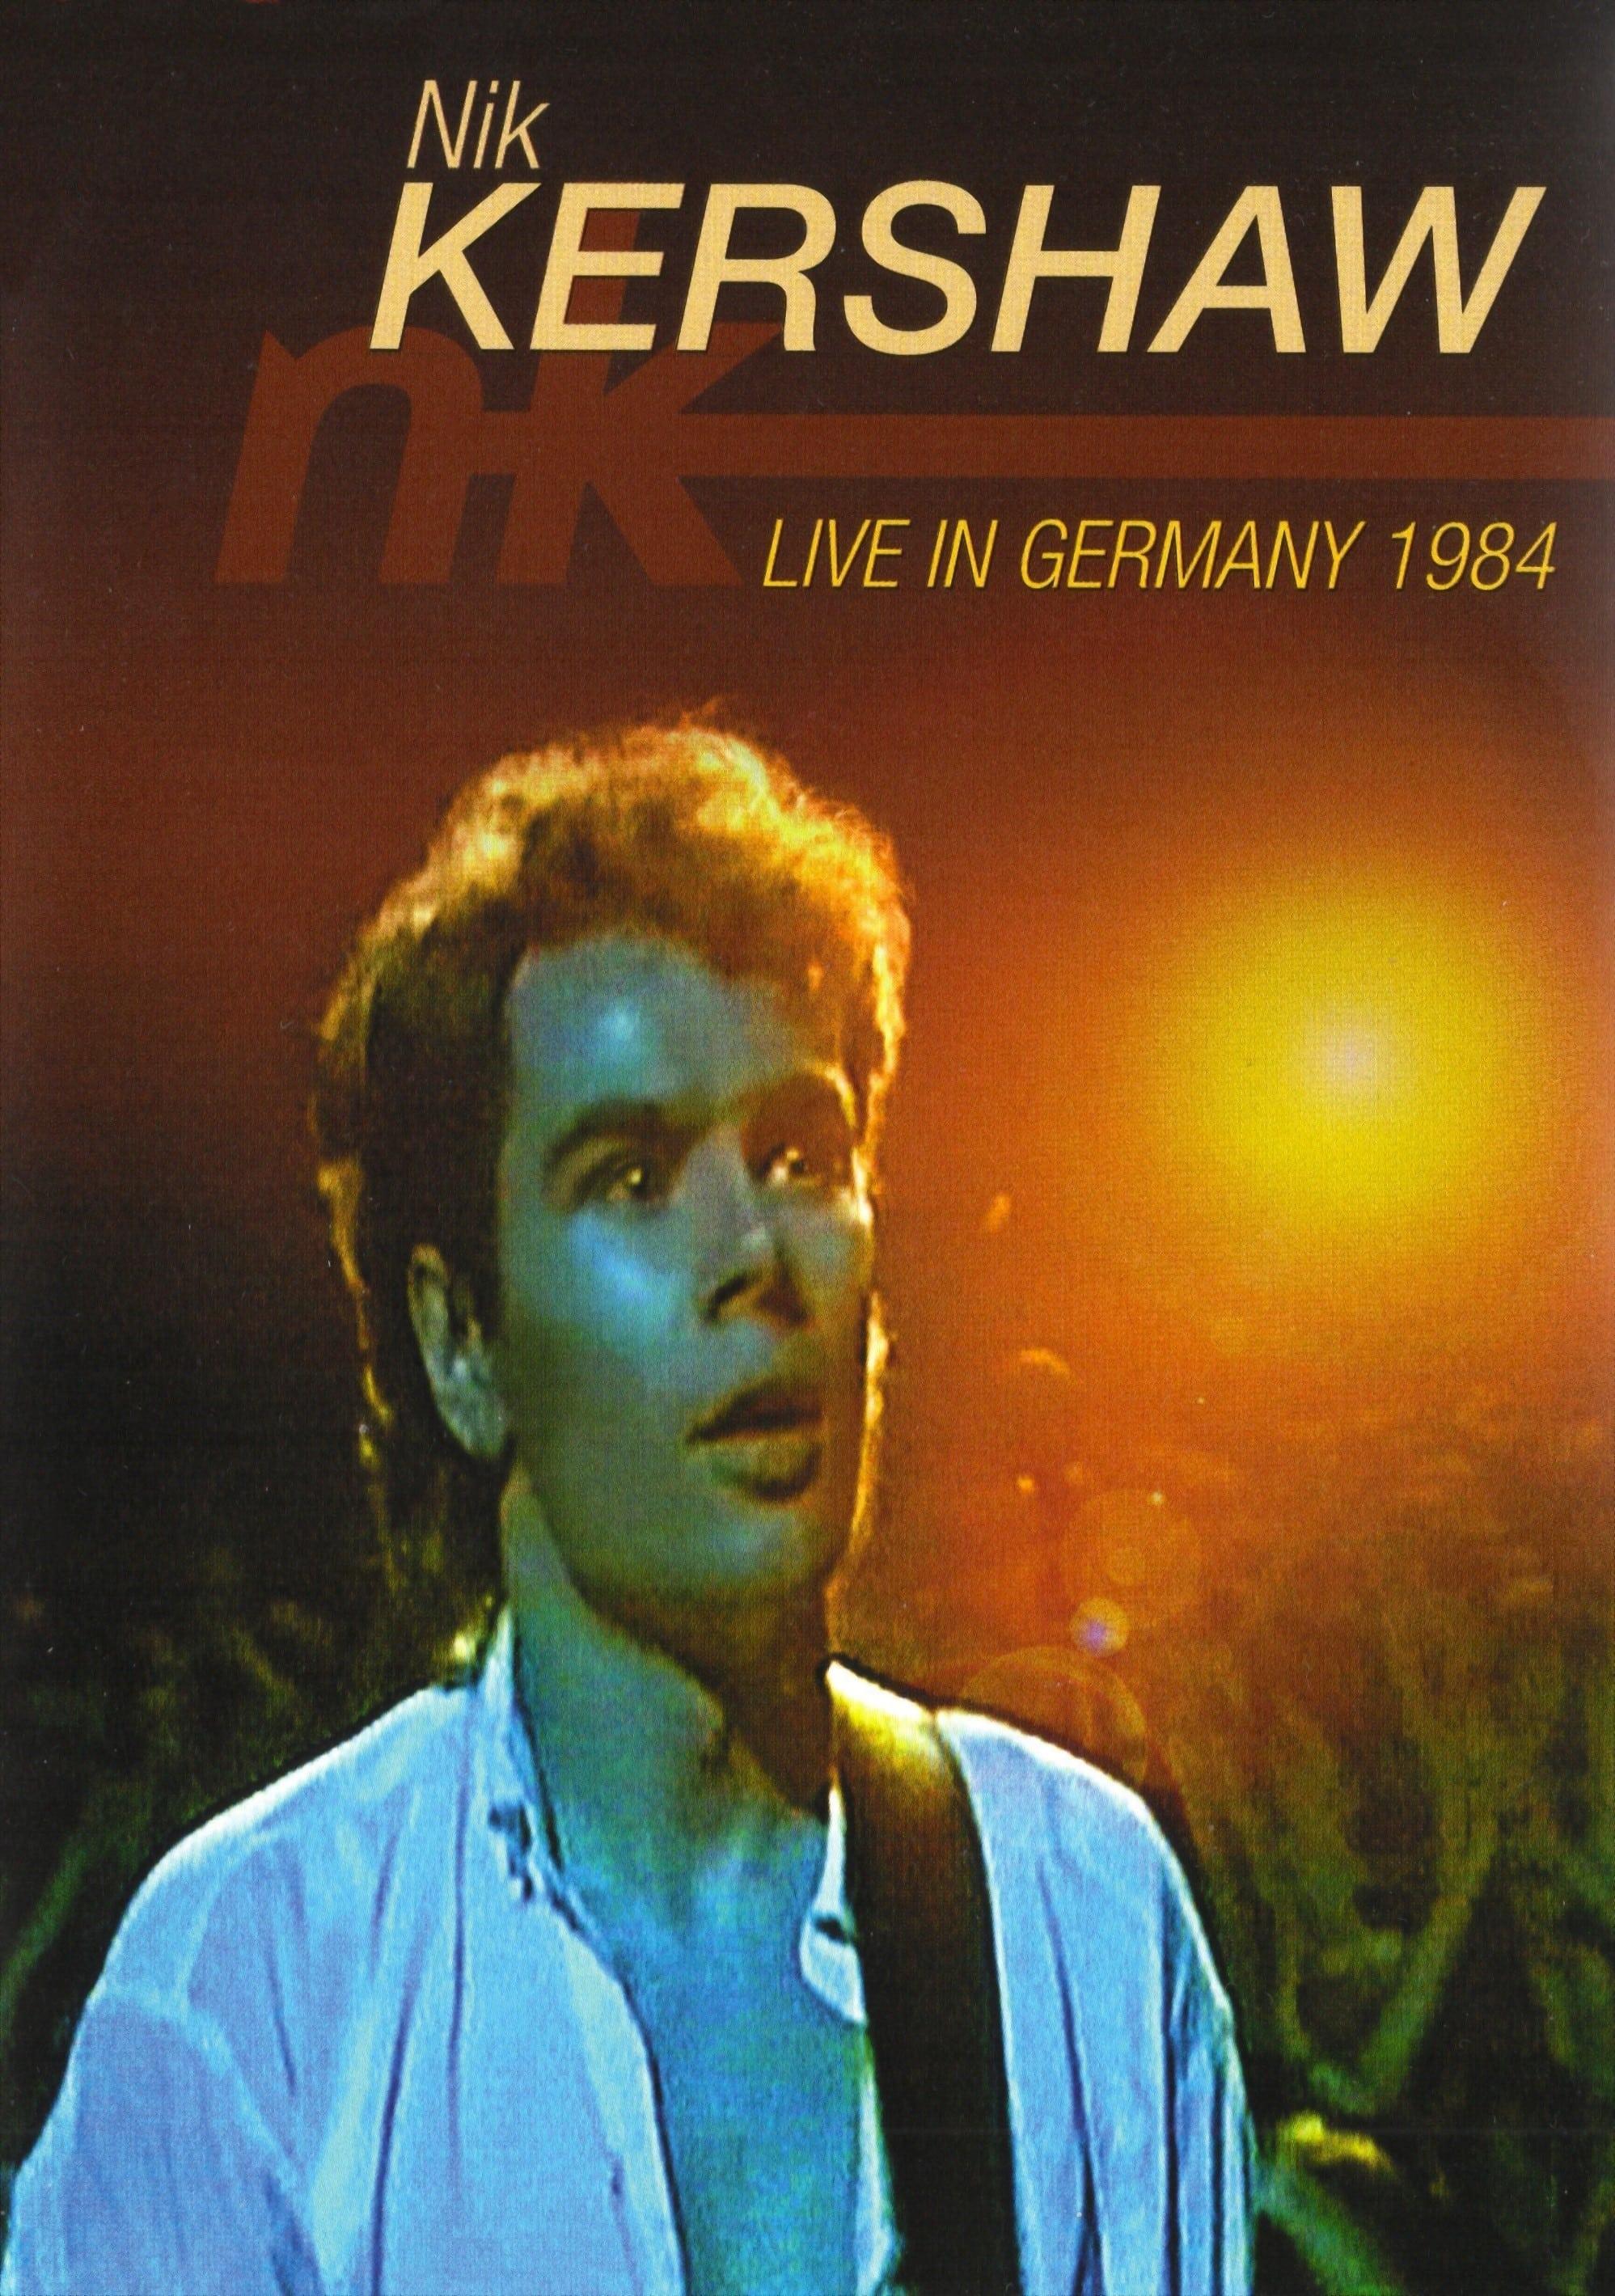 Nik Kershaw - Live in Germany 1984 poster